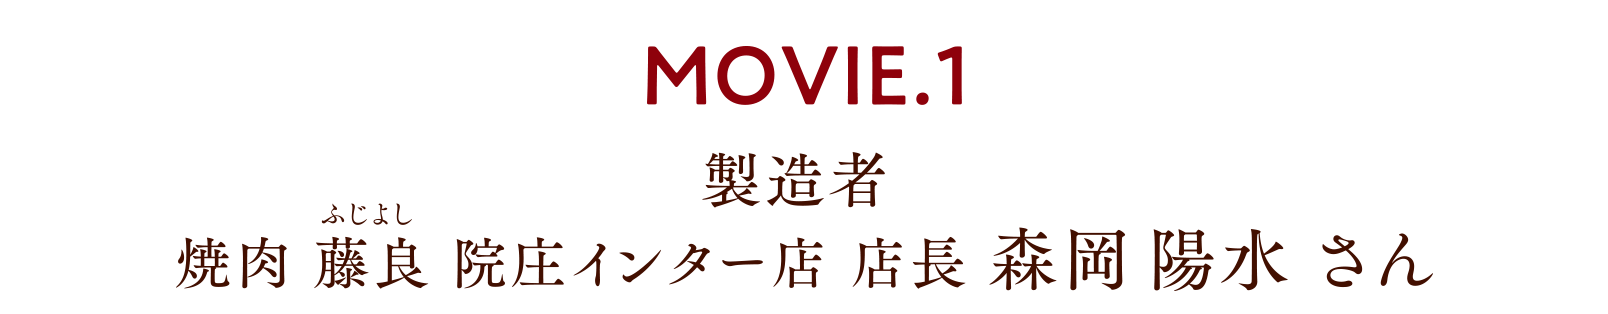 MOVIE.1 製造スタッフ 片山 桃子 さん・春名 美空 さん